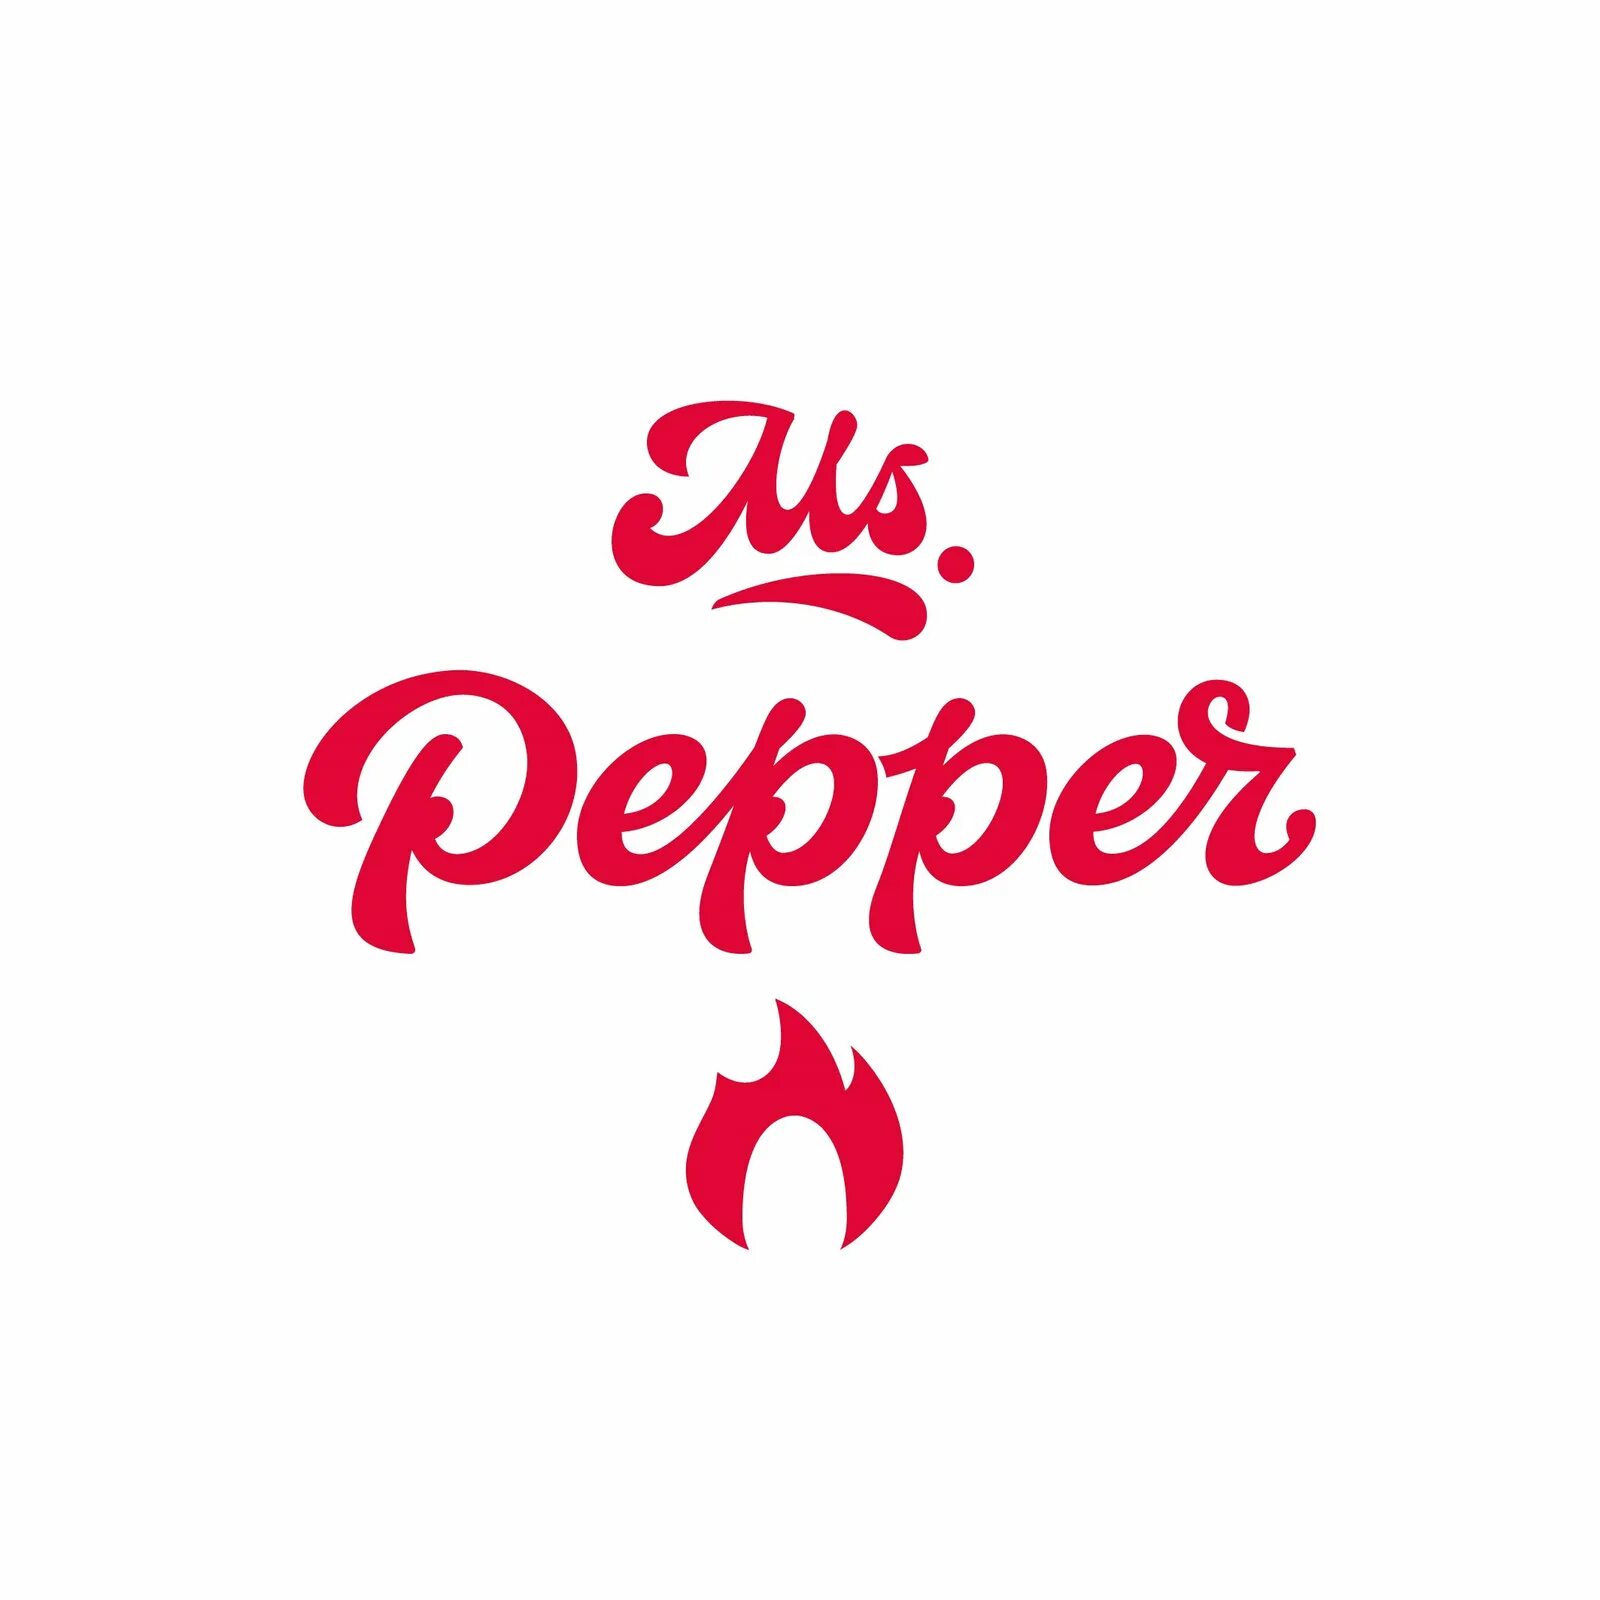 Pepper масловка. MS салон красоты. MS Pepper. MS.Pepper Москва. Салон MS Pepper верхняя Масловка.